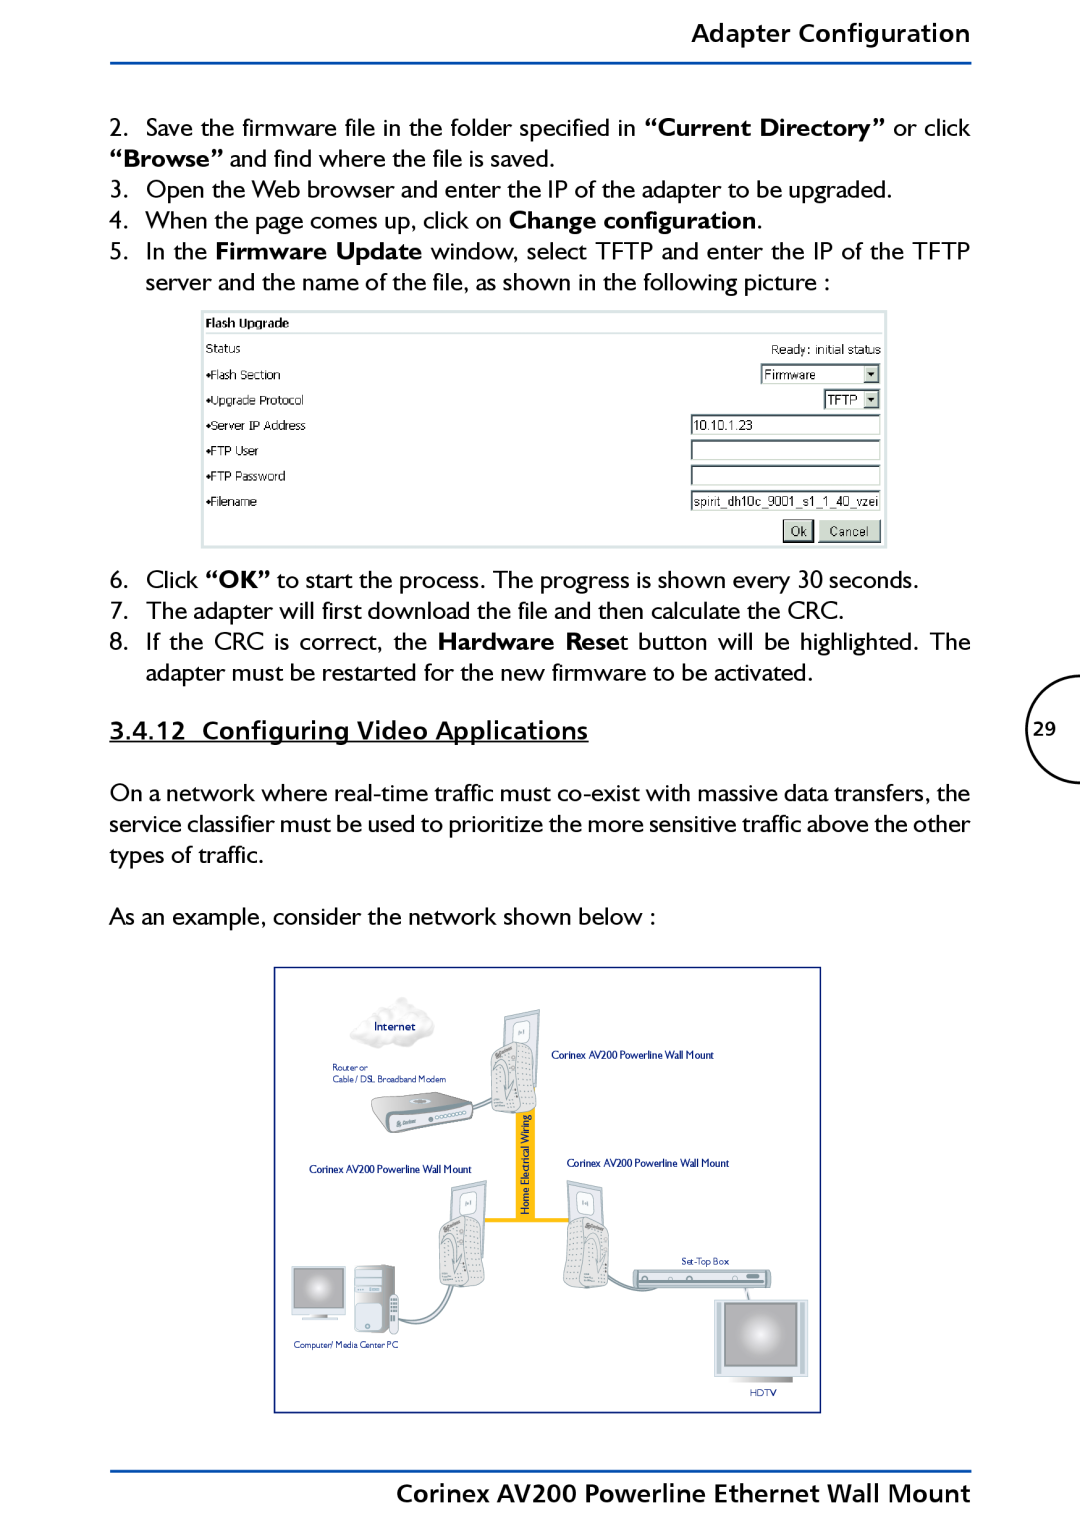 DeWalt manual Configuring Video Applications, Adapter Configuration, Corinex AV200 Powerline Ethernet Wall Mount 